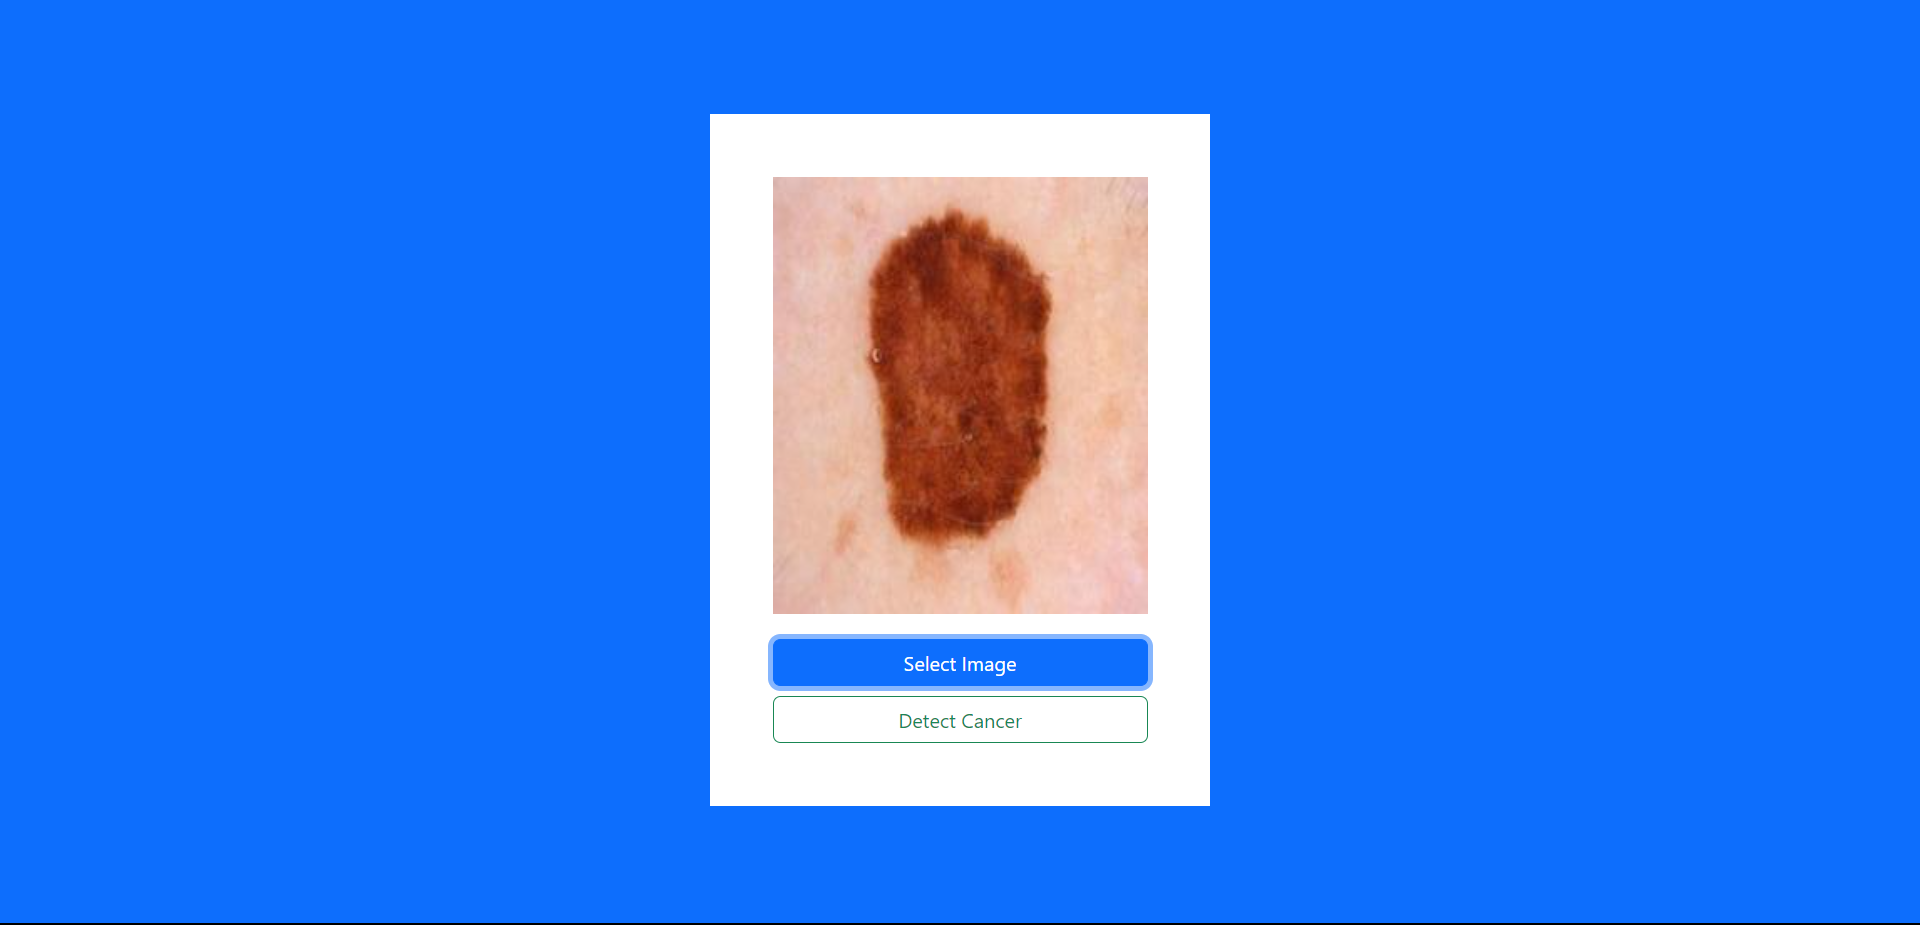 Human Skin Cancer Detector user interface